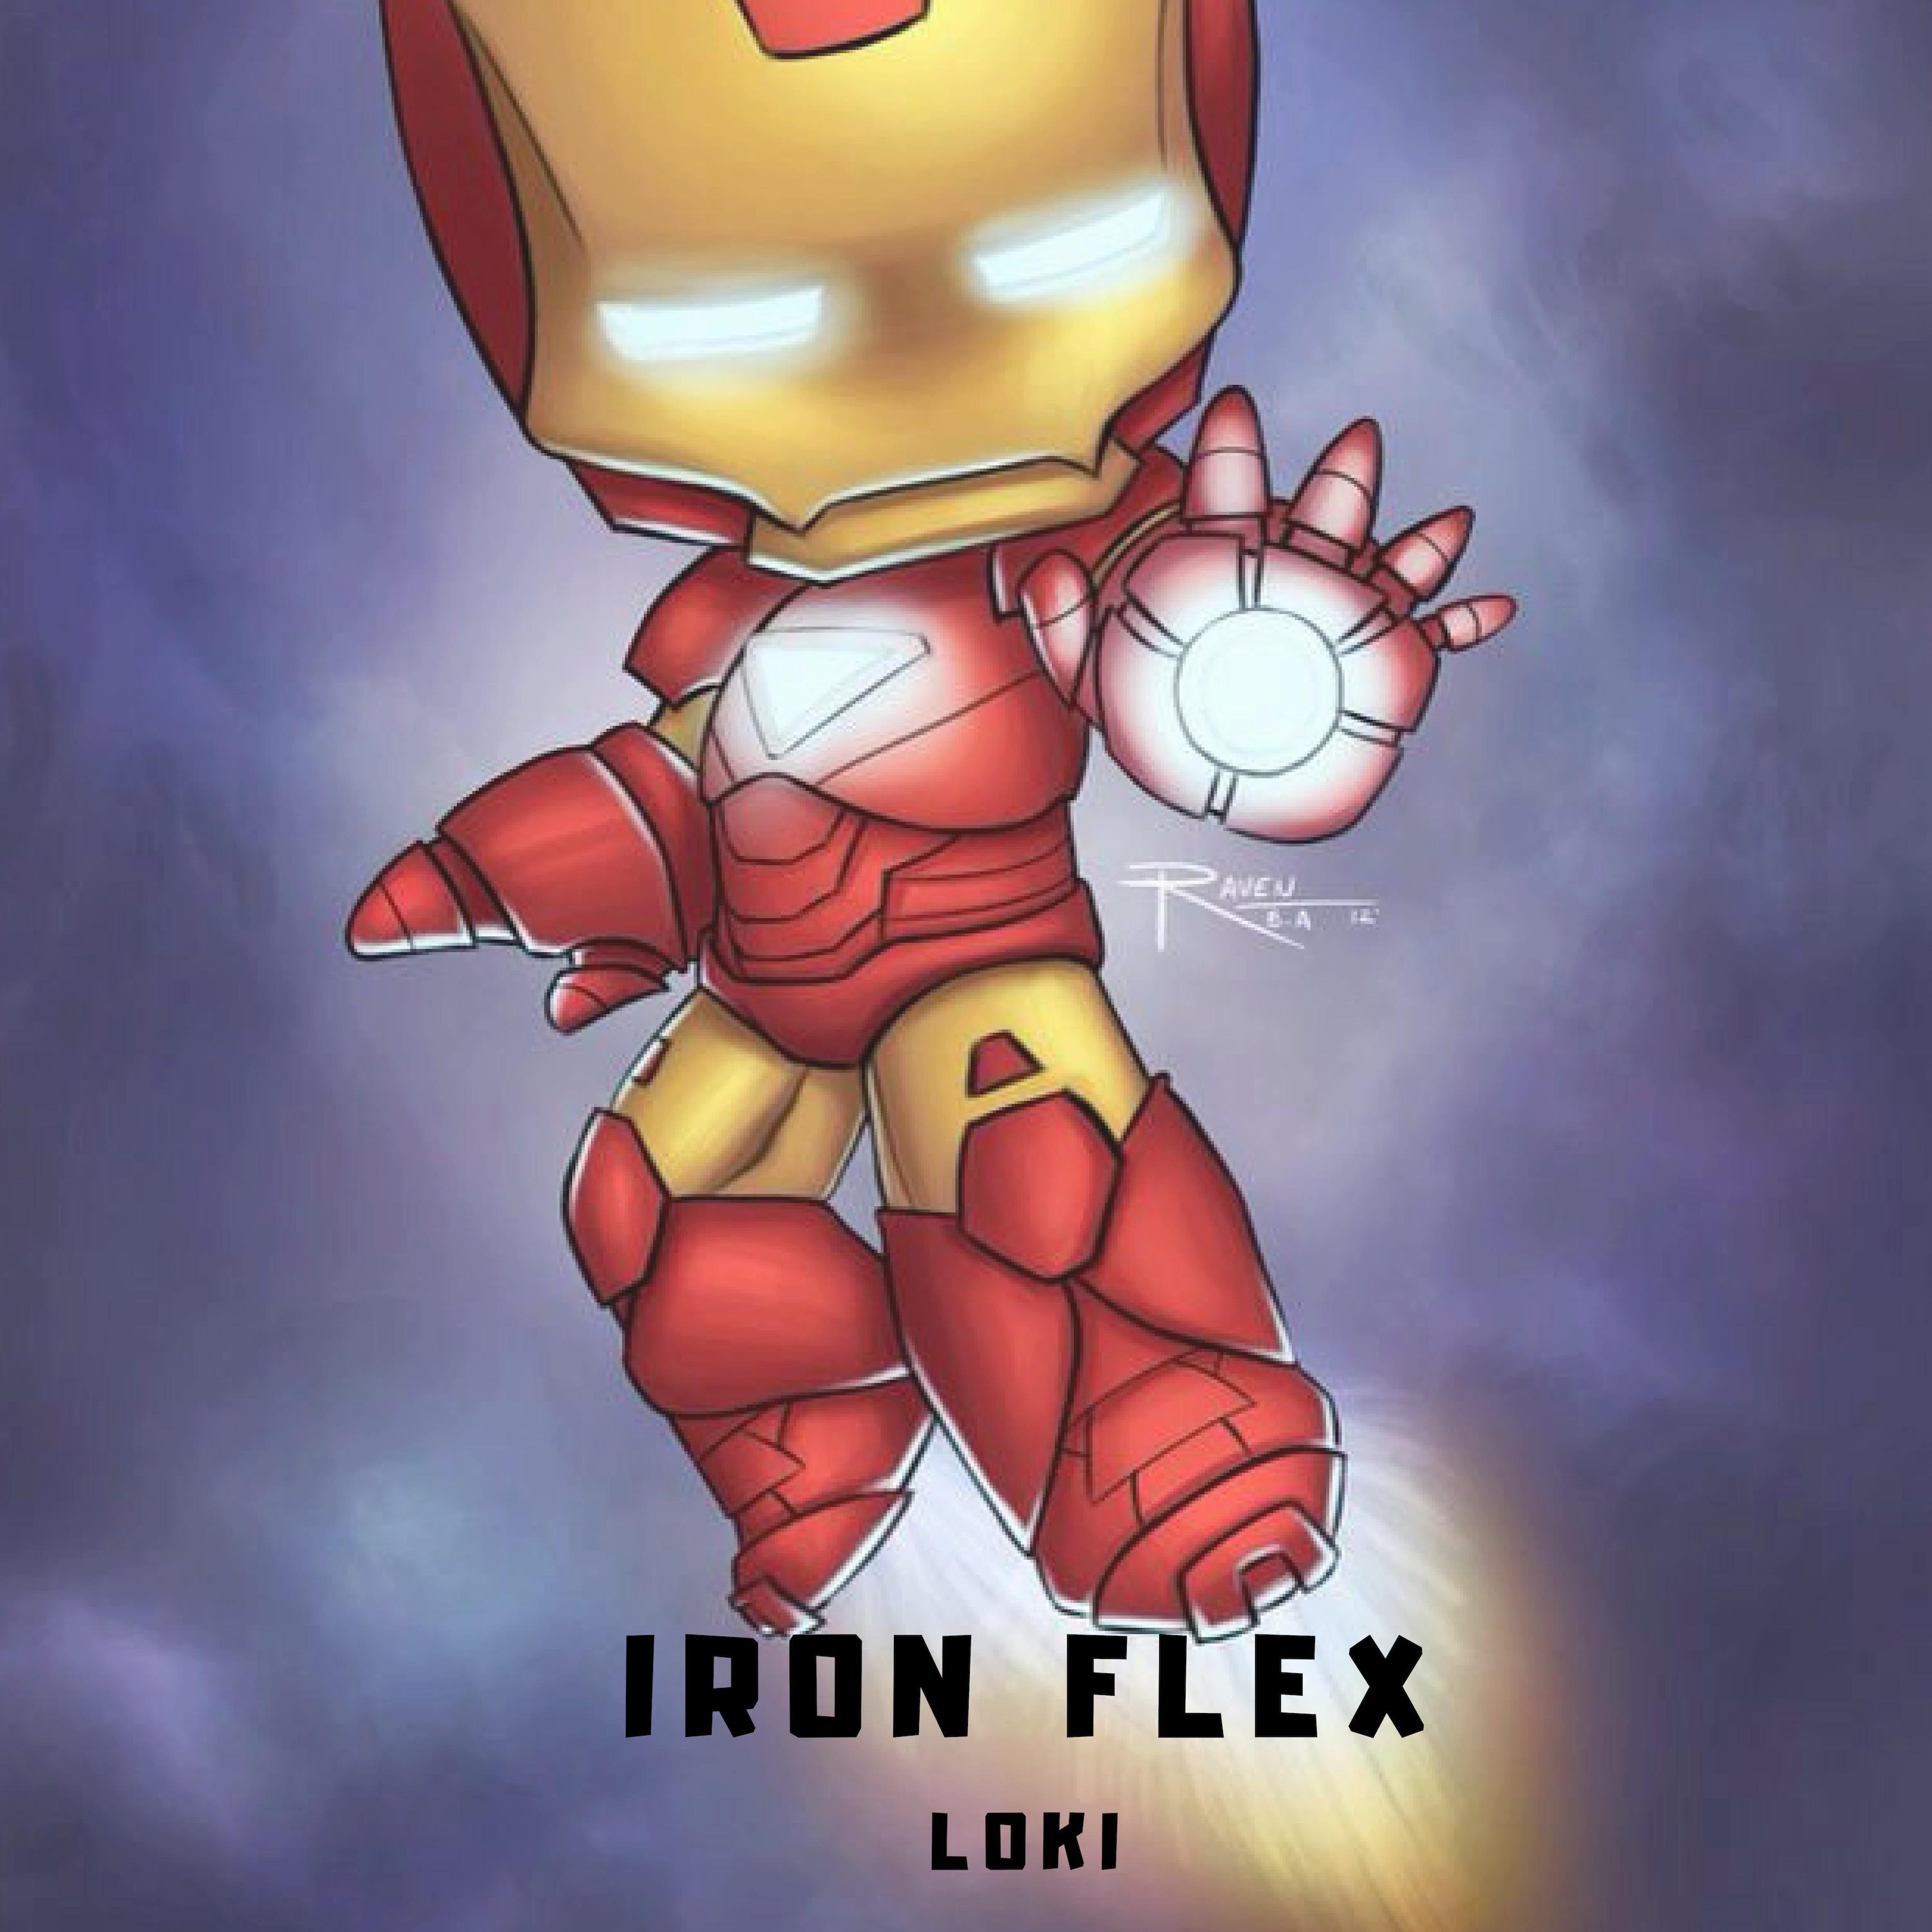 Iron Flex